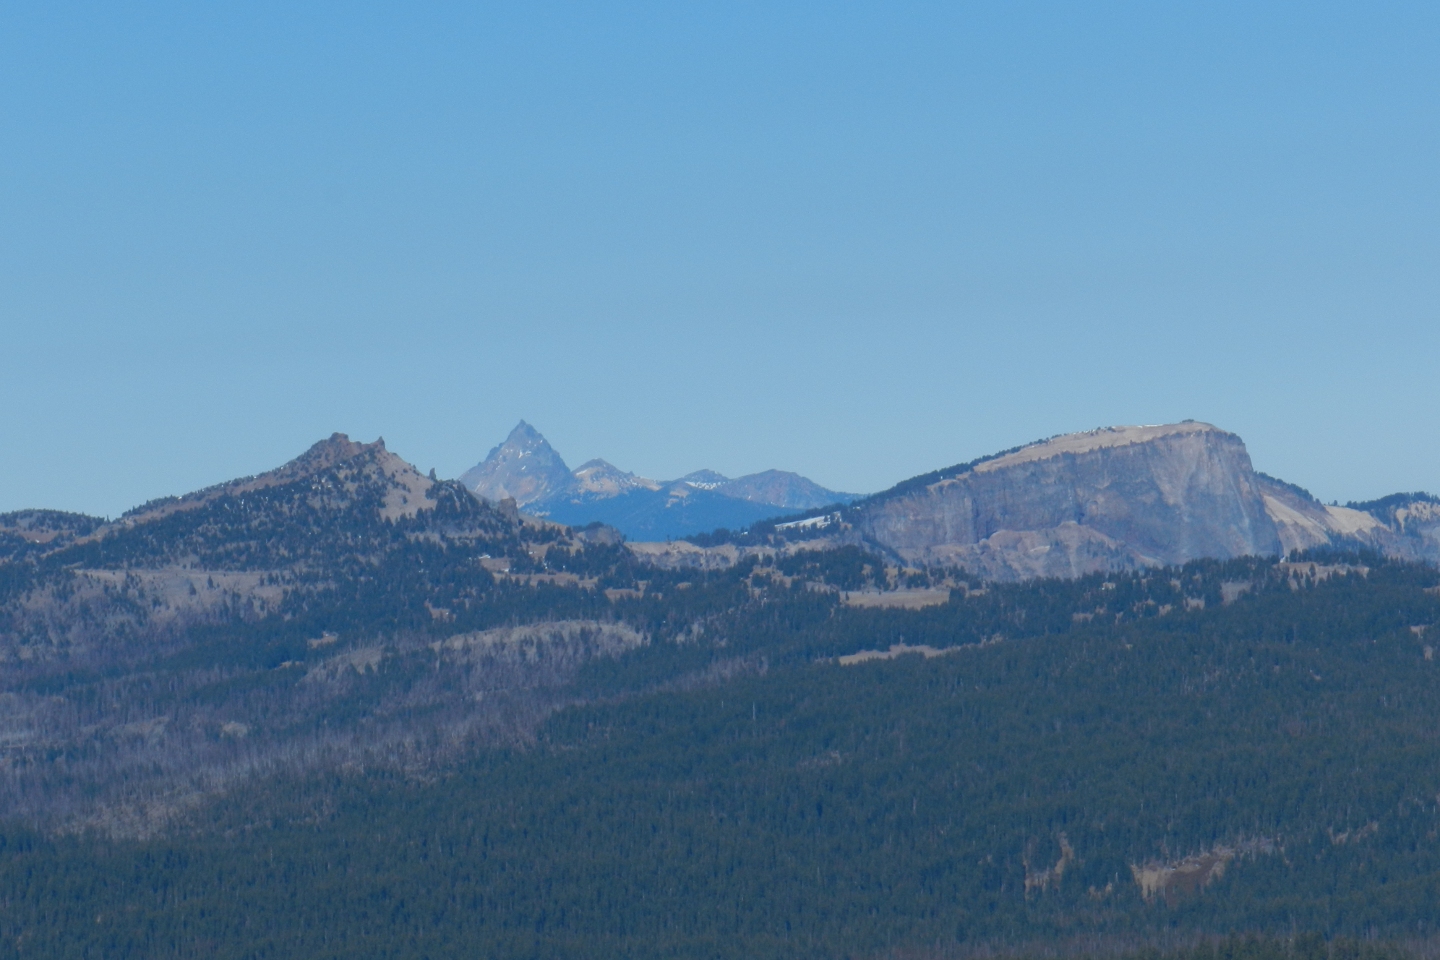 Hillman Peak, The Watchman, Mt. Thielsen and Llao Rock